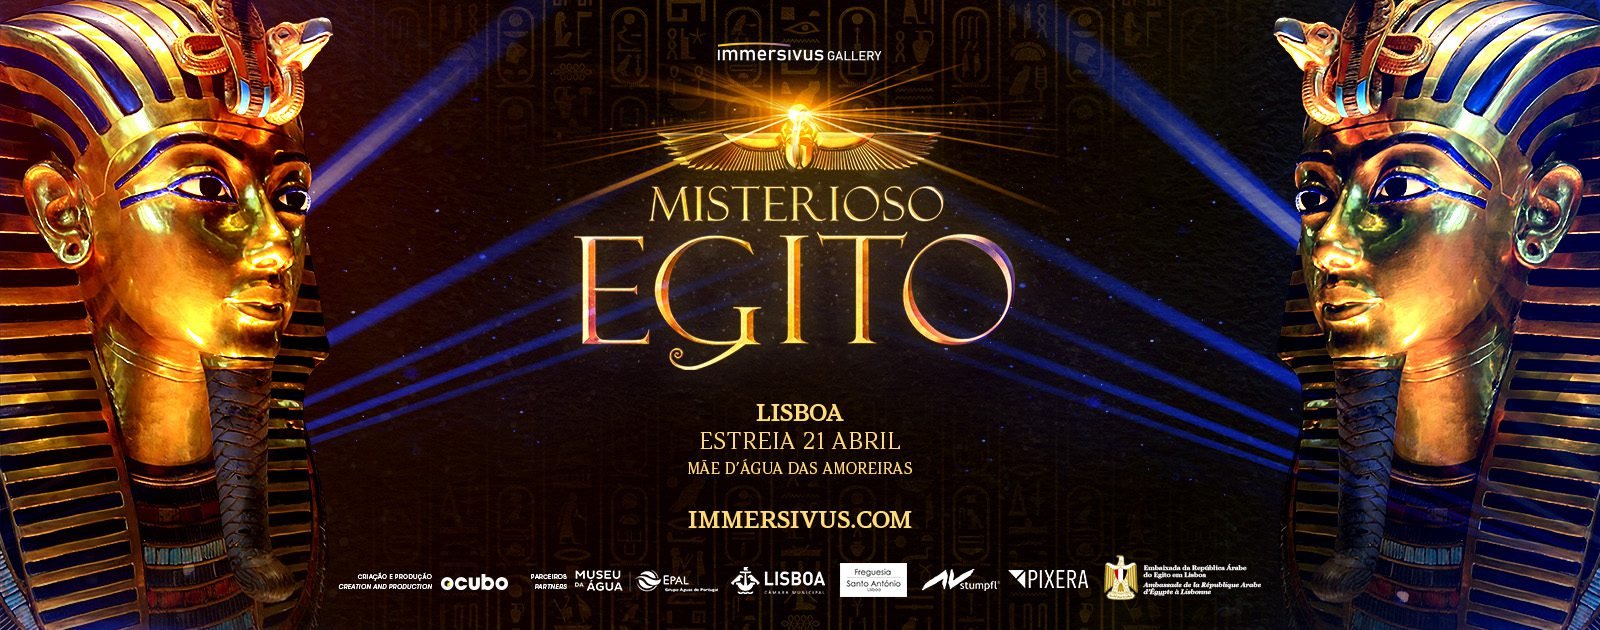 OCUBO_MISTERIOSO EGIPTO-Banner_lisboa